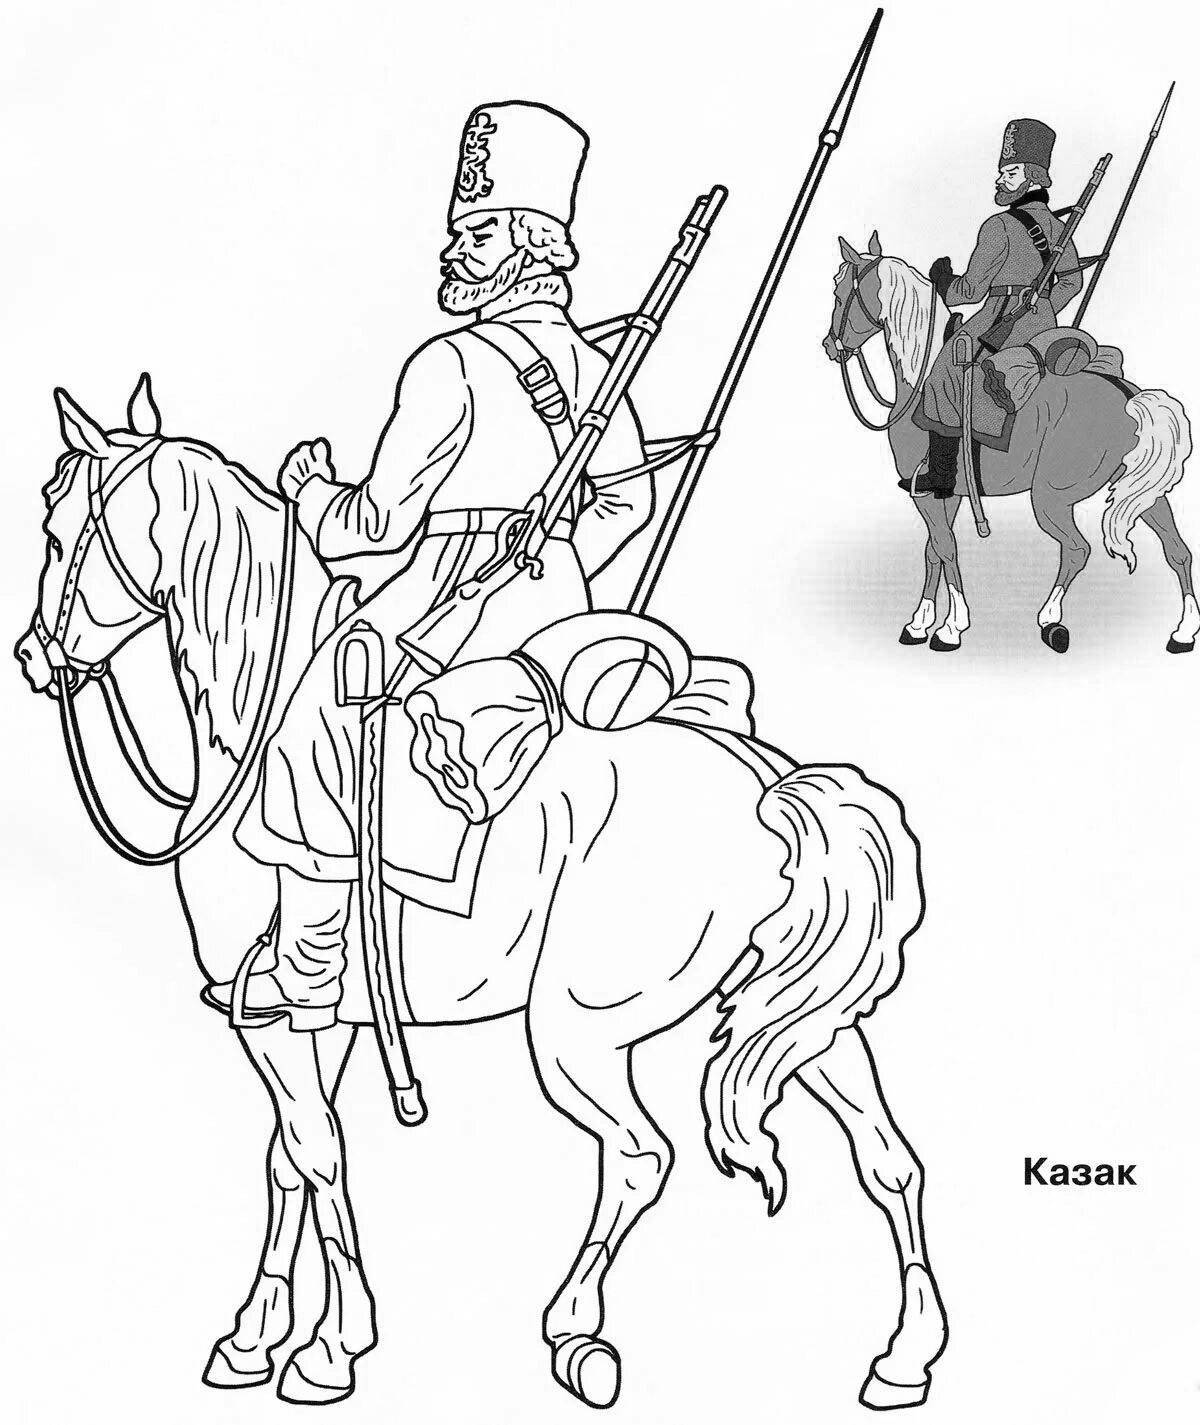 Radiant Cossacks in the Kuban